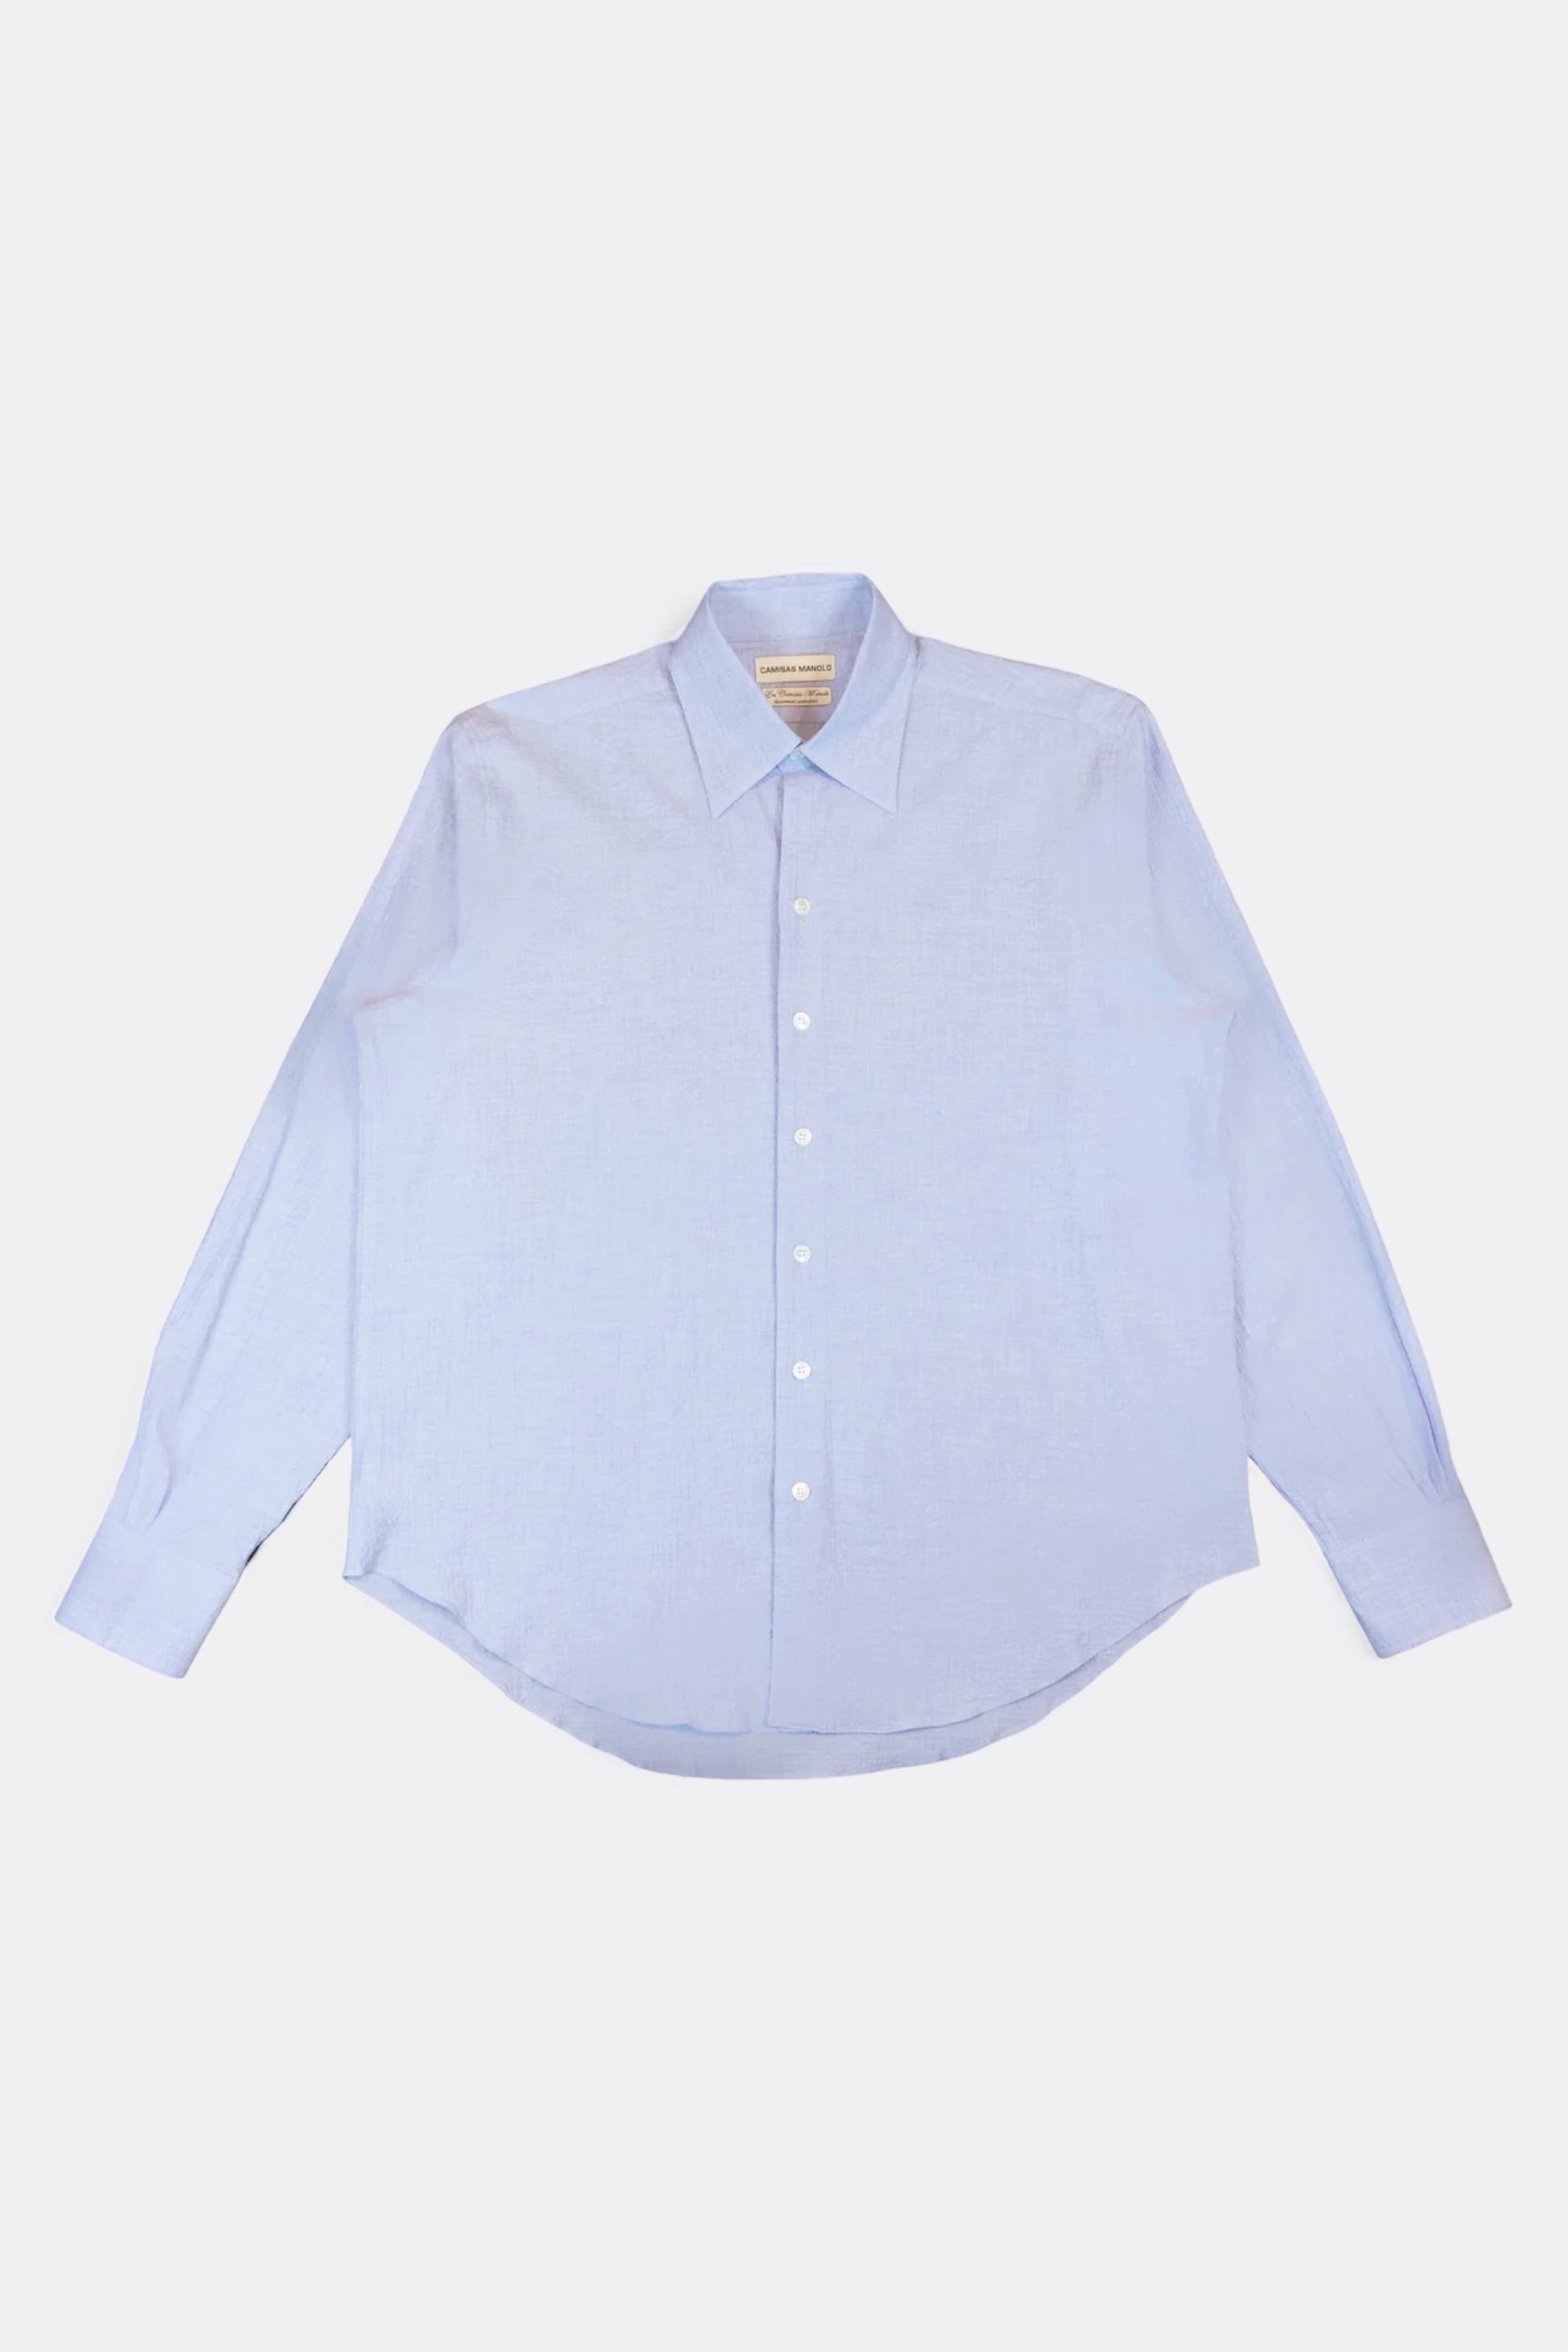 Camisas Manolo - Normal Shirt (Blue Seersucker)